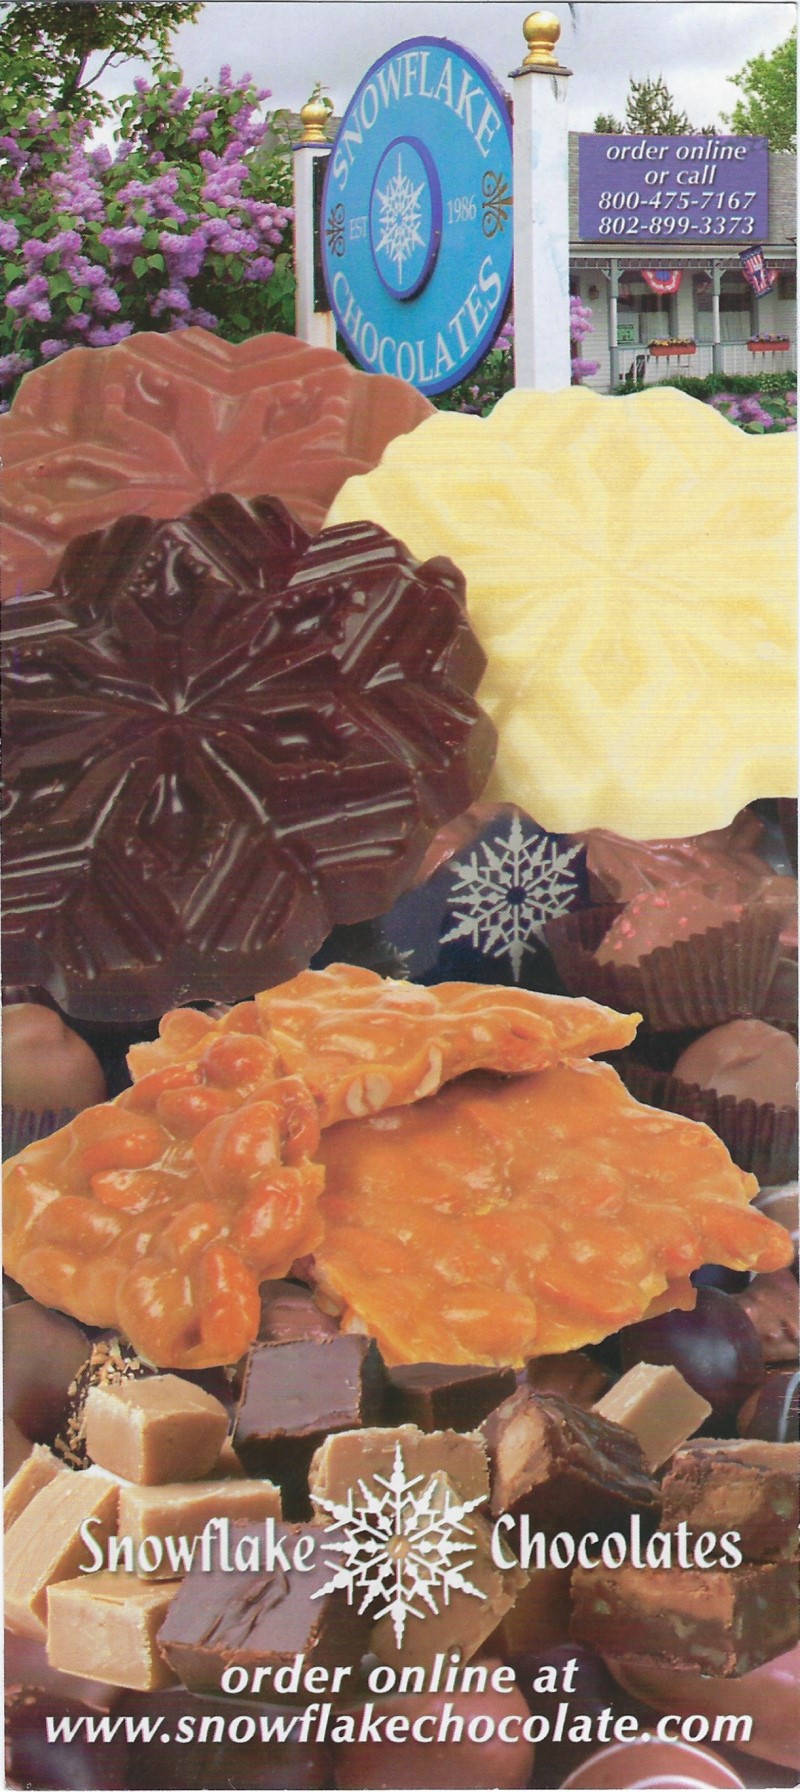 Snowflake Chocolates brochure thumbnail